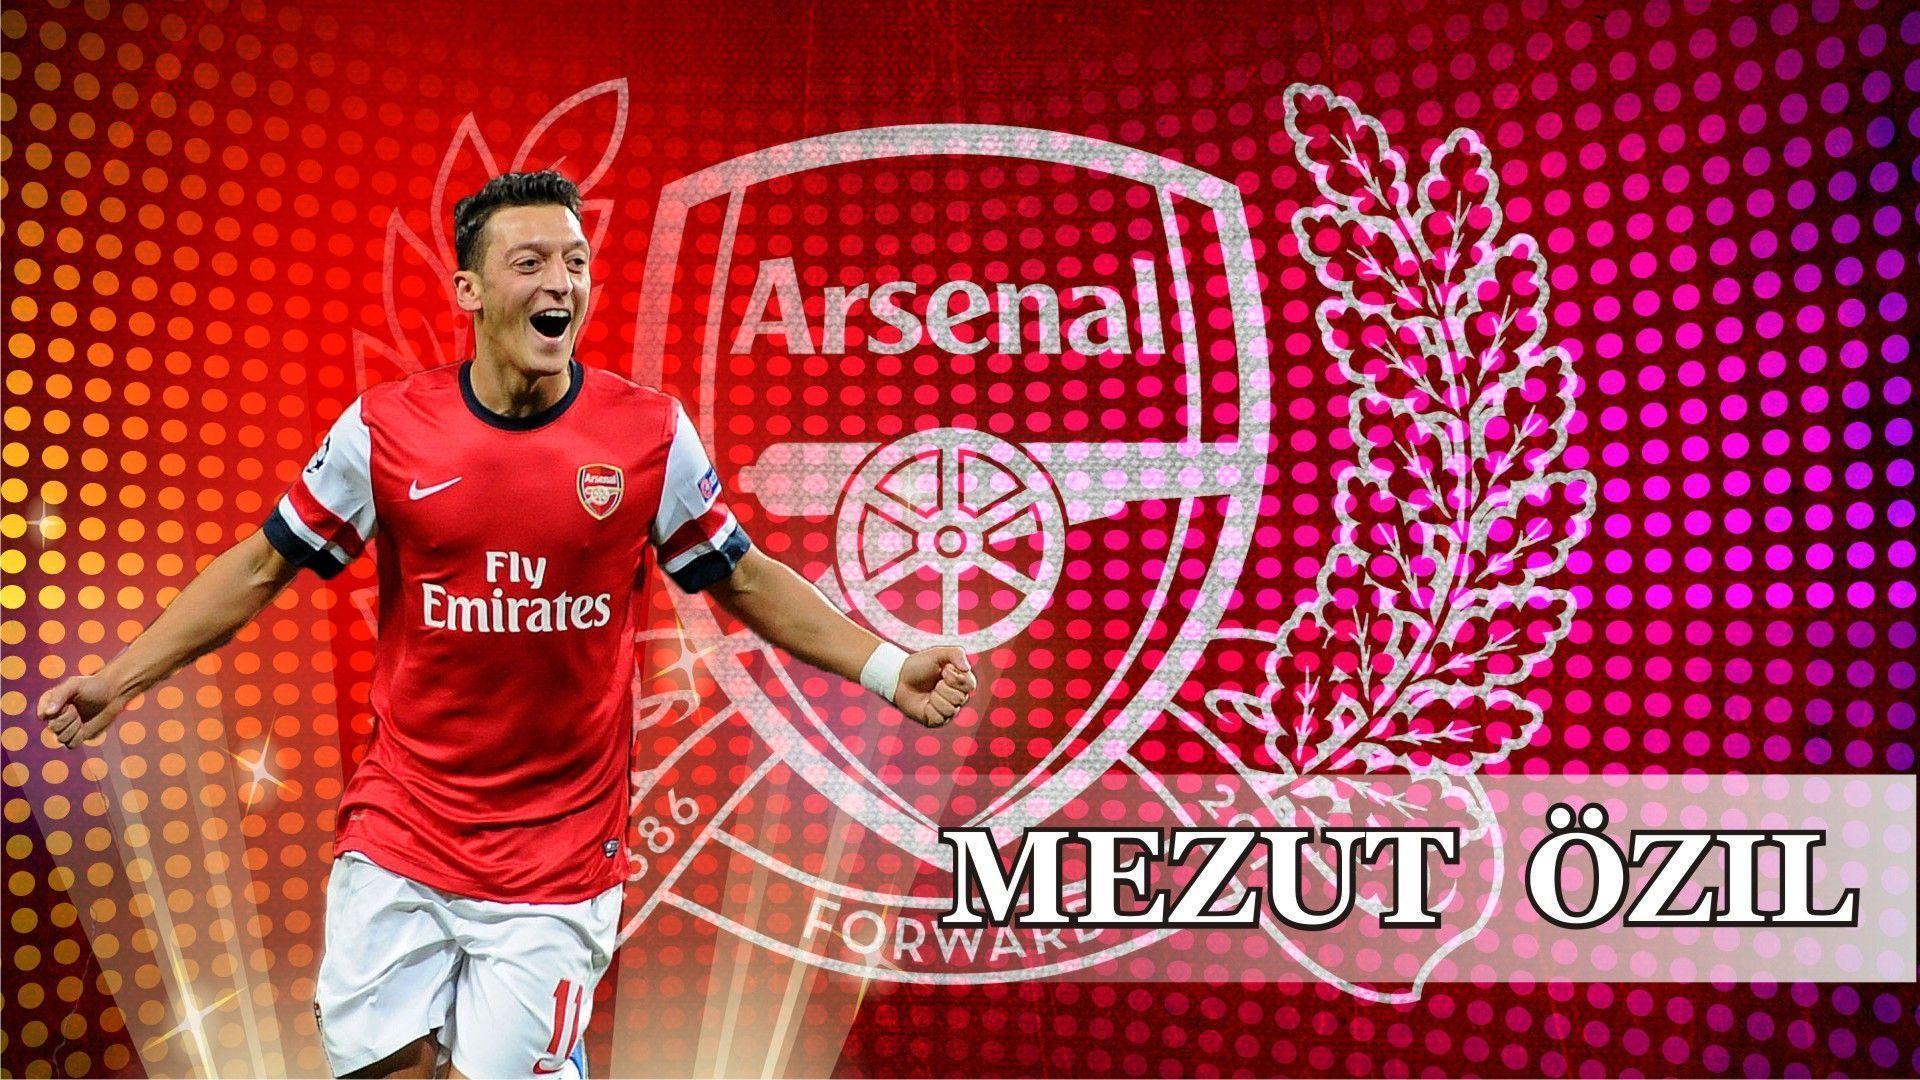 Mesut Özil Wallpaper HD. Wallpaper, Background, Image, Art Photo